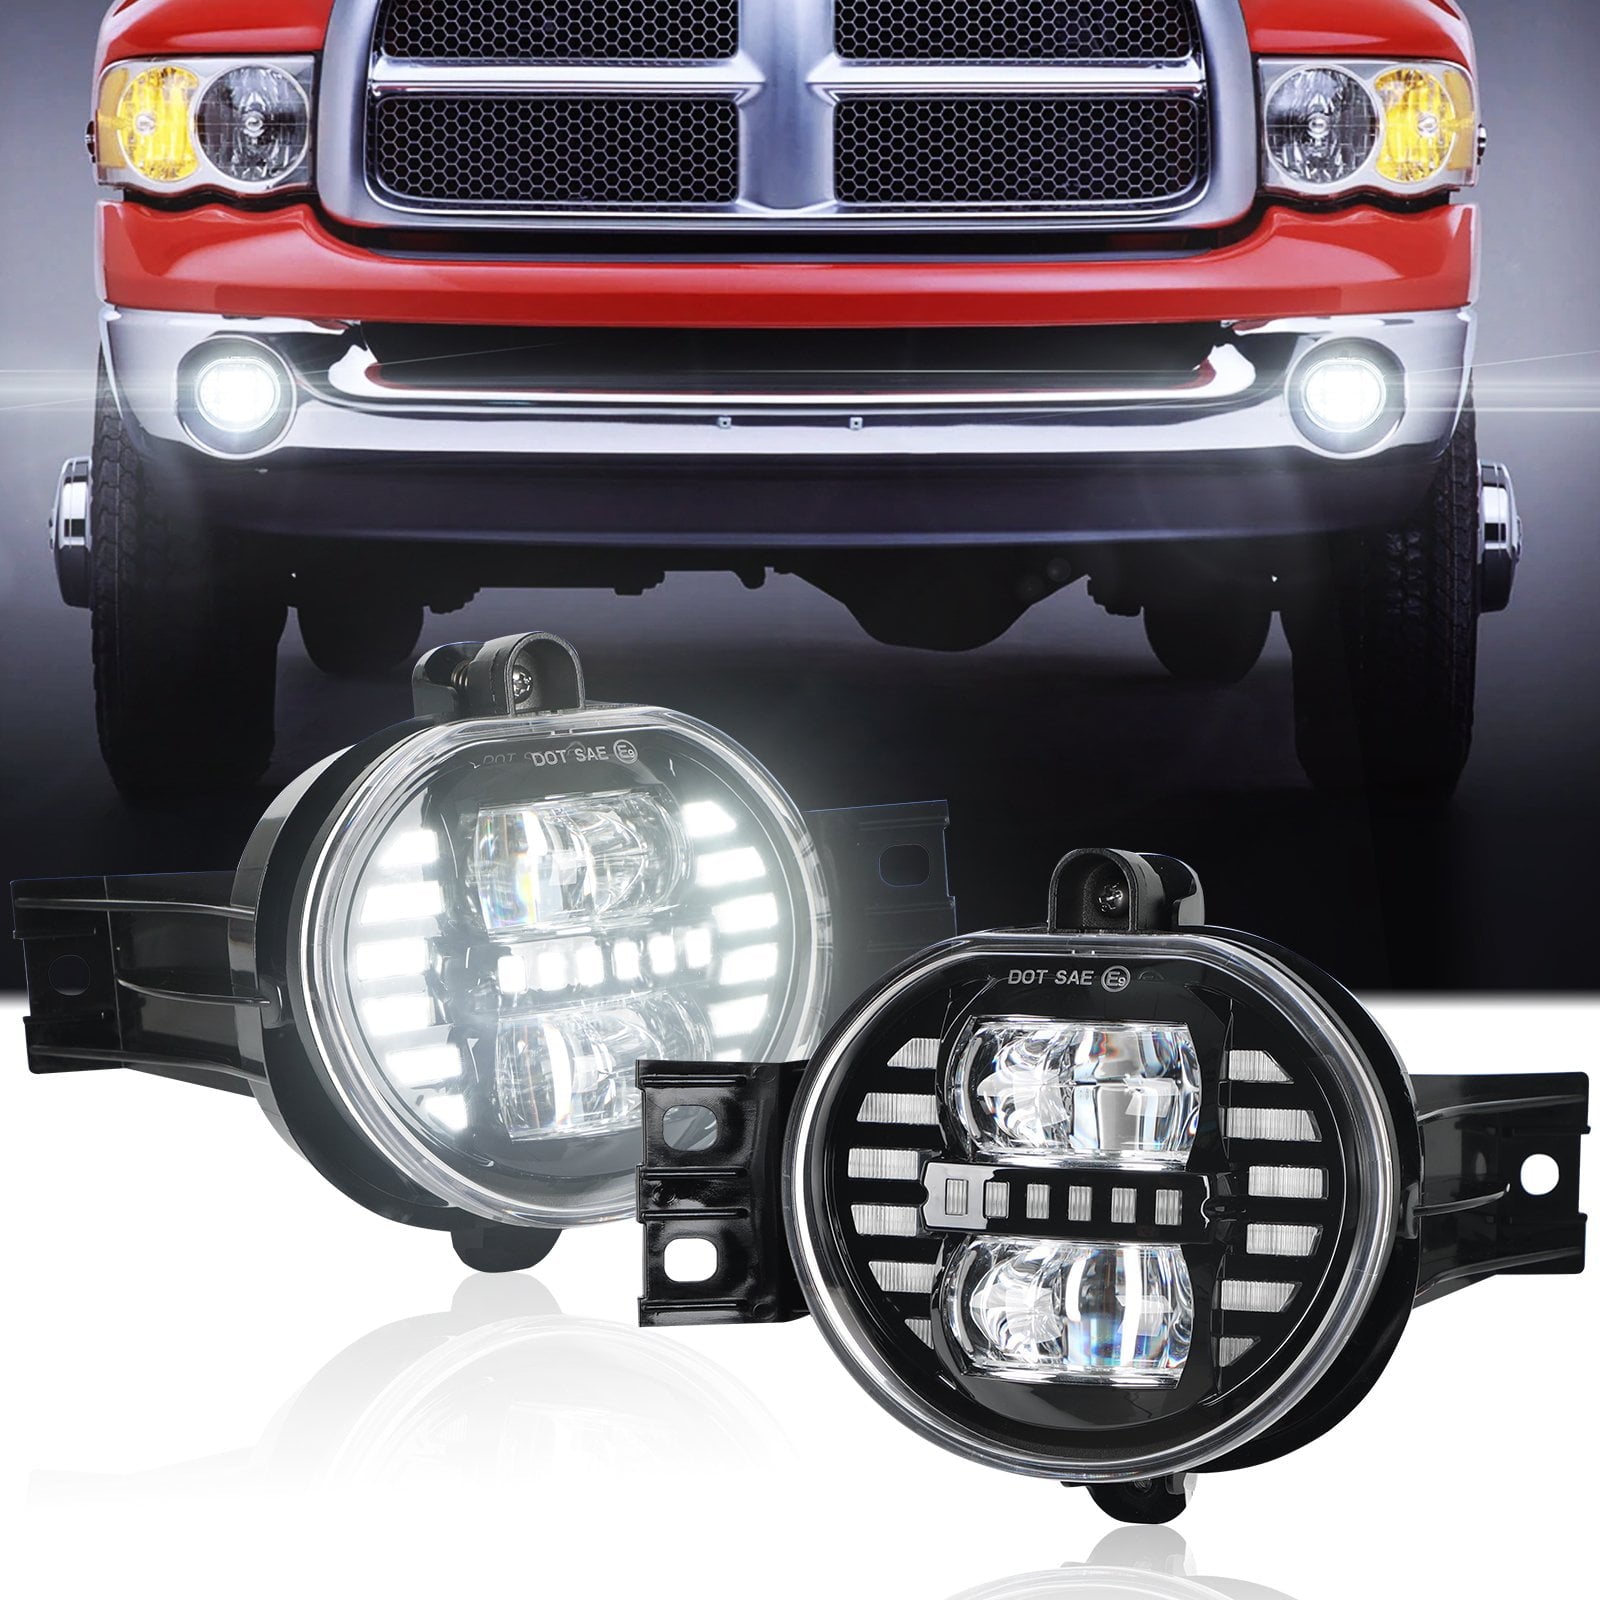 70W LED Foglight for Dodge | Pair freeshipping - loyolight